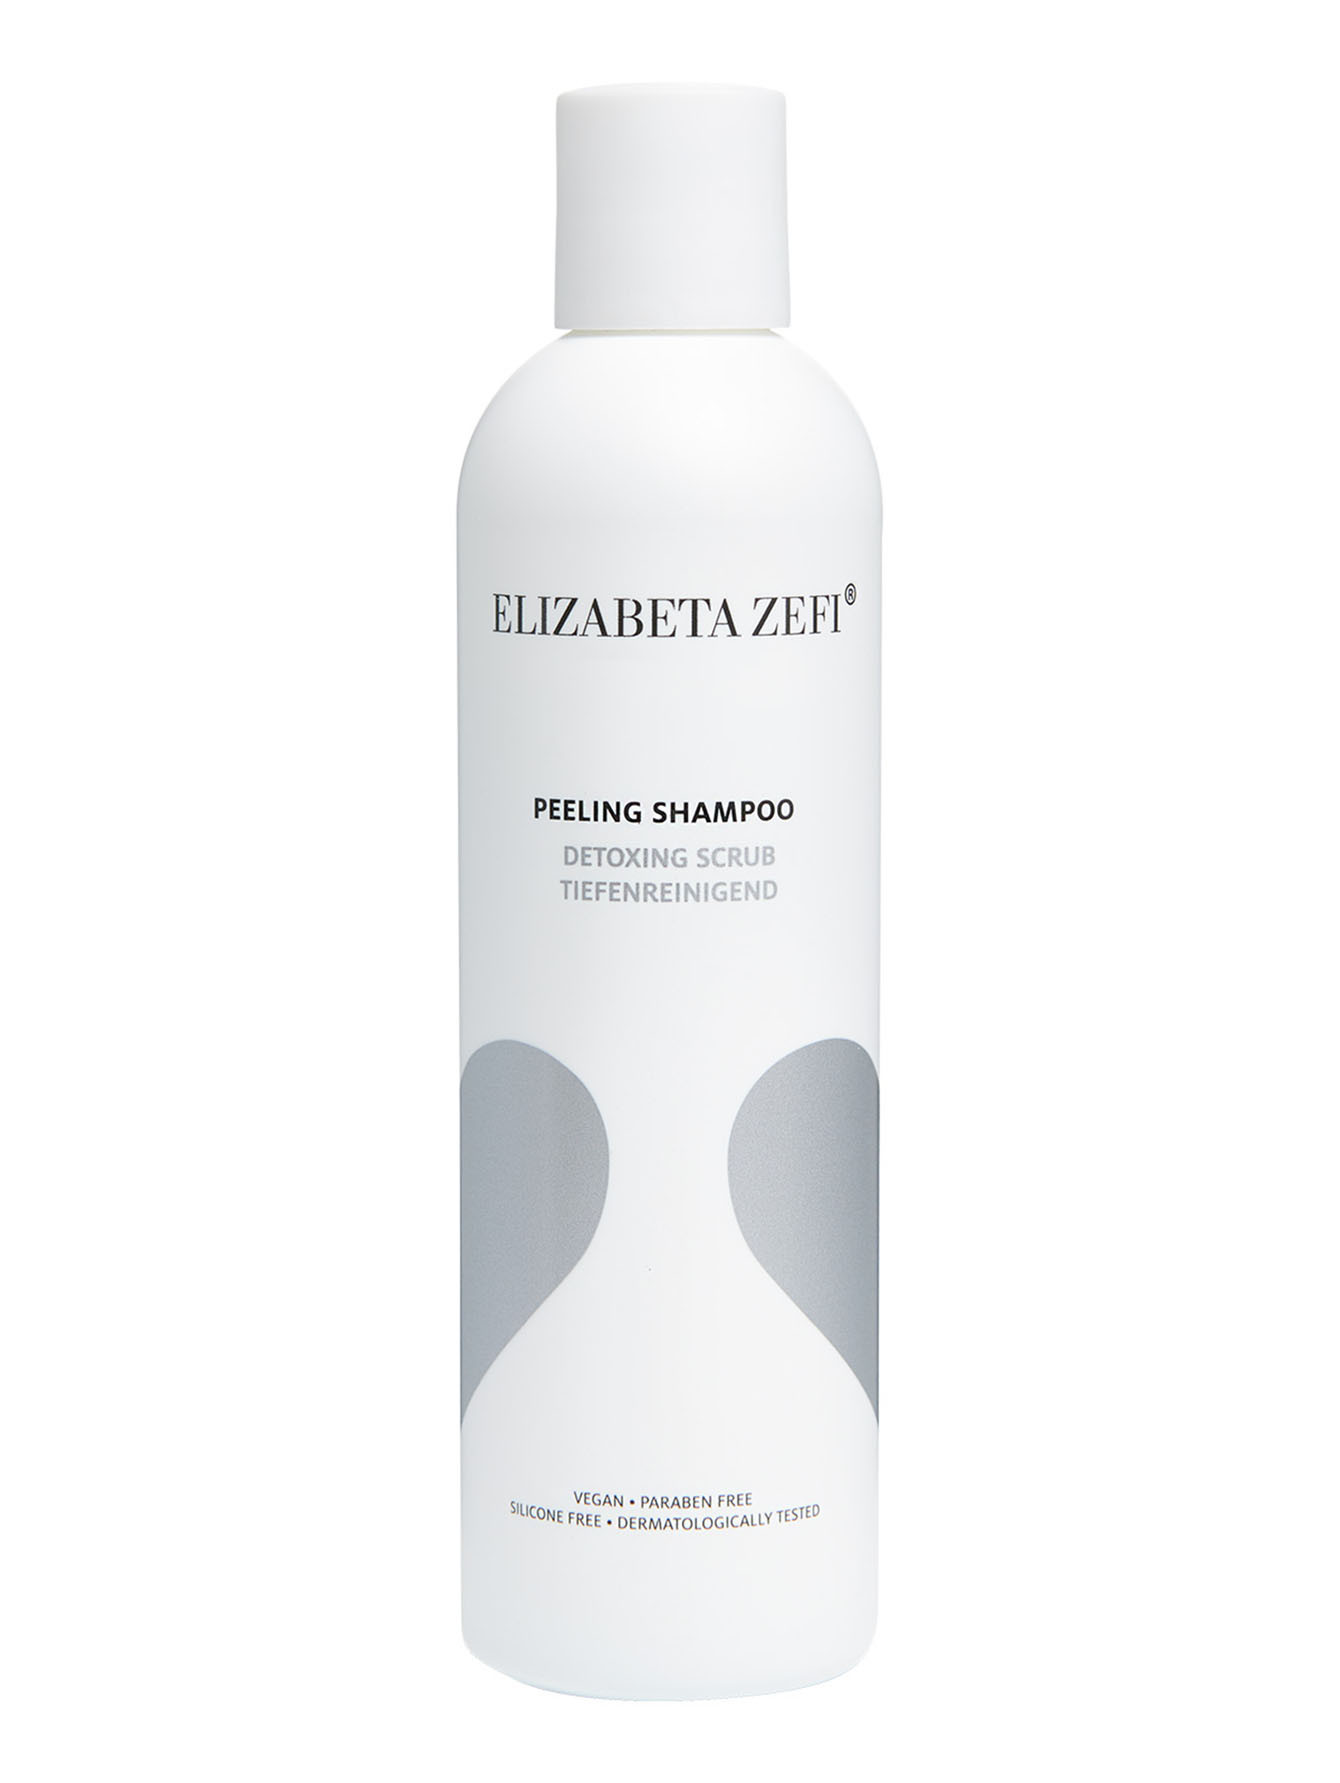 Очищающий детокс-шампунь для волос Peeling Shampoo, 250 мл - Общий вид